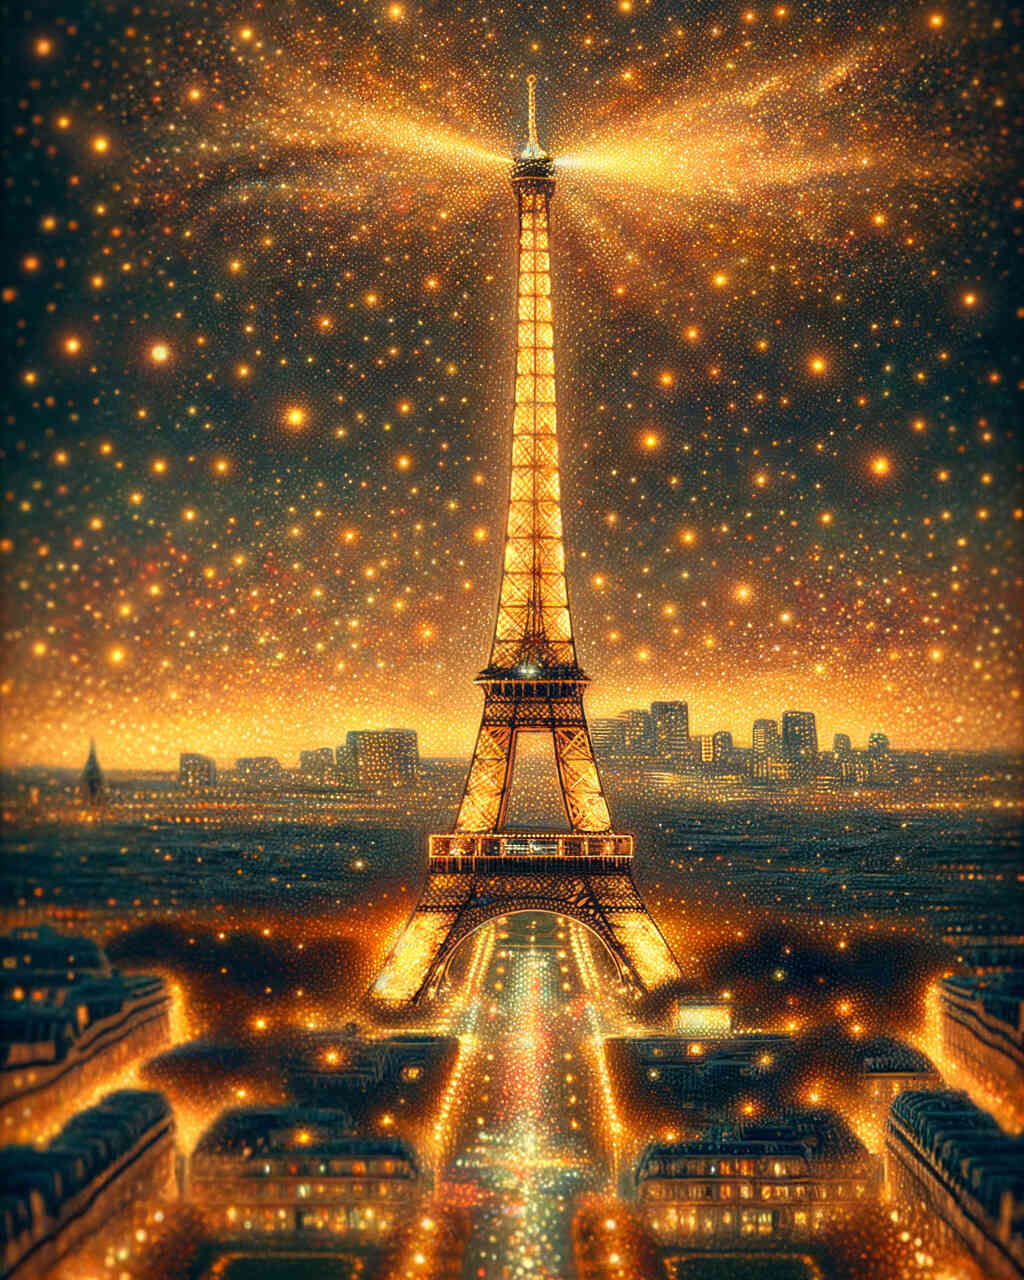 Diamond Painting - Strahlender Eiffelturm Paris